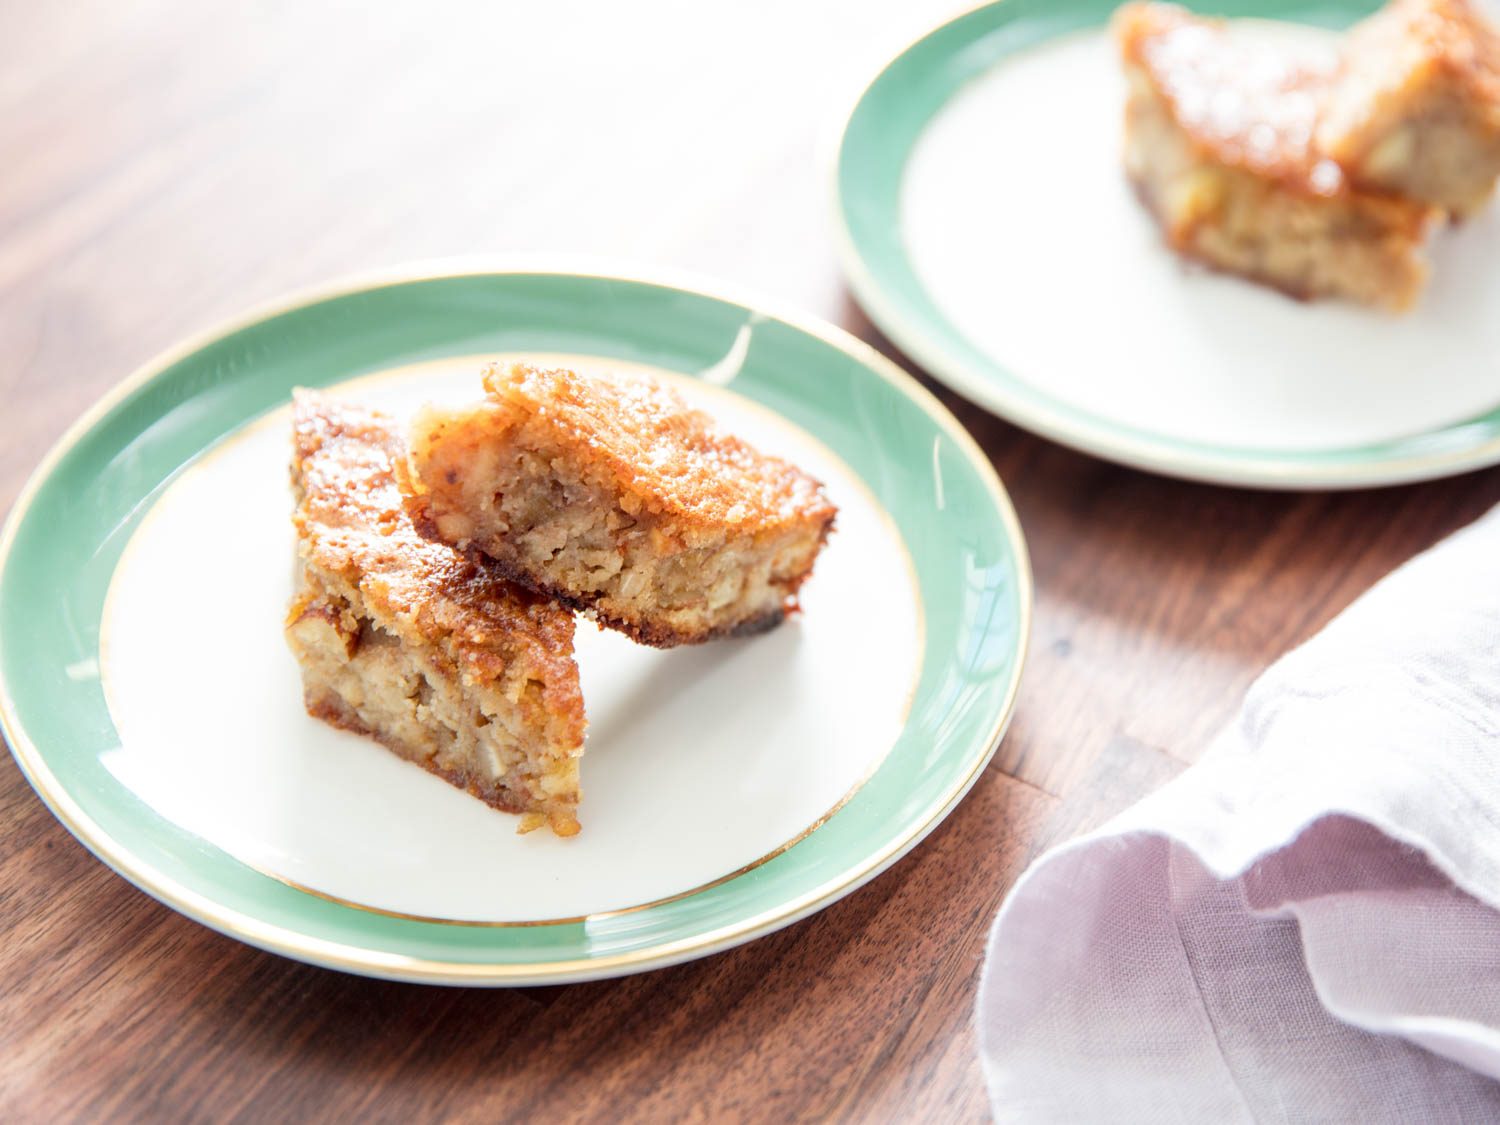 Apple-Ginger Tishpishti (Gluten-Free Almond and Walnut Cake)